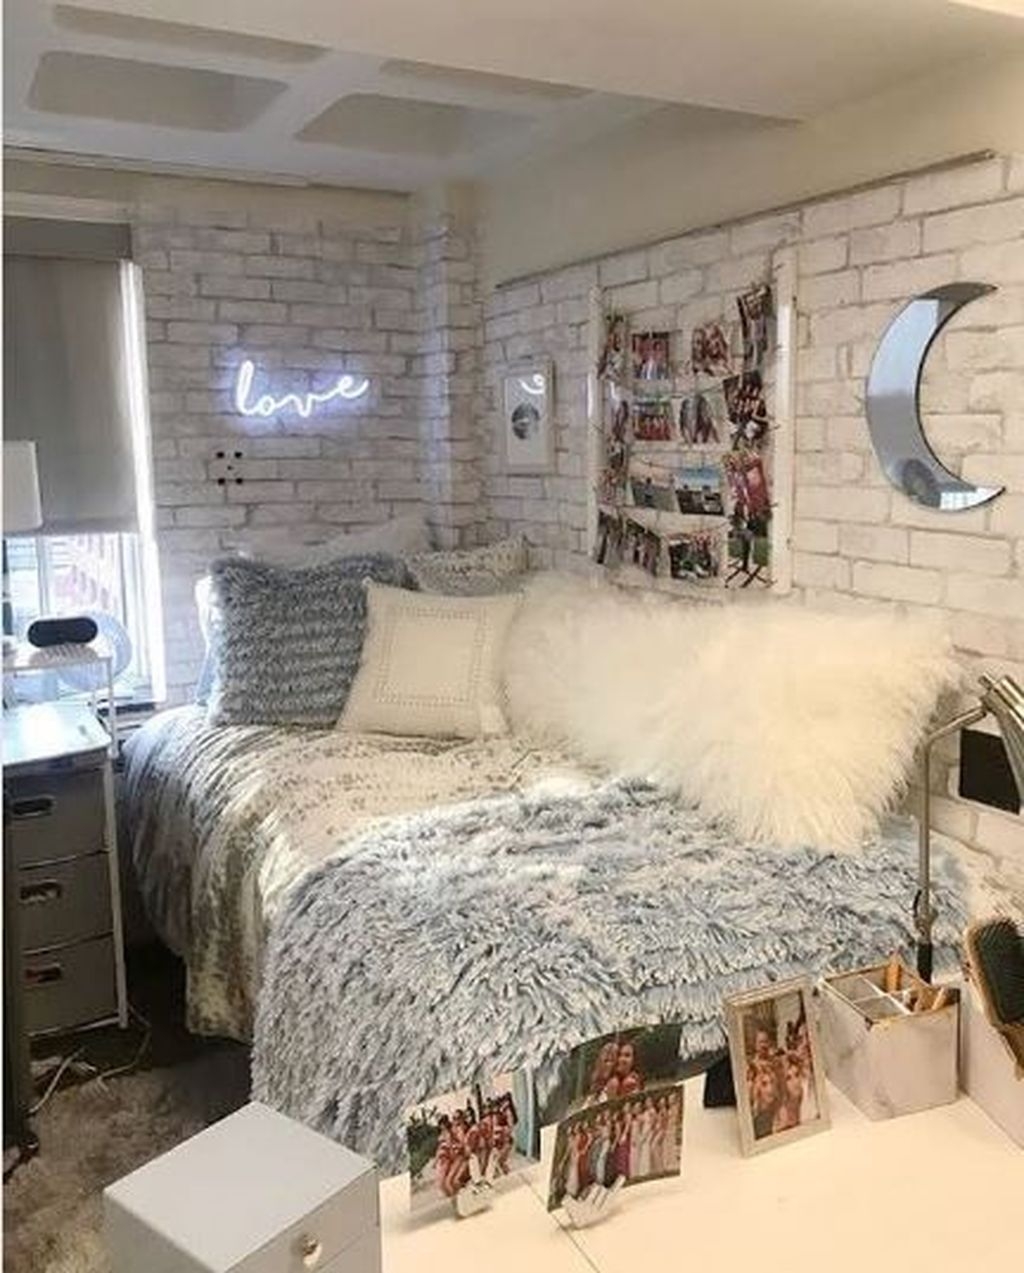 Splendid Dorm Room Ideas To Tare Room Decor To The Next Level 15